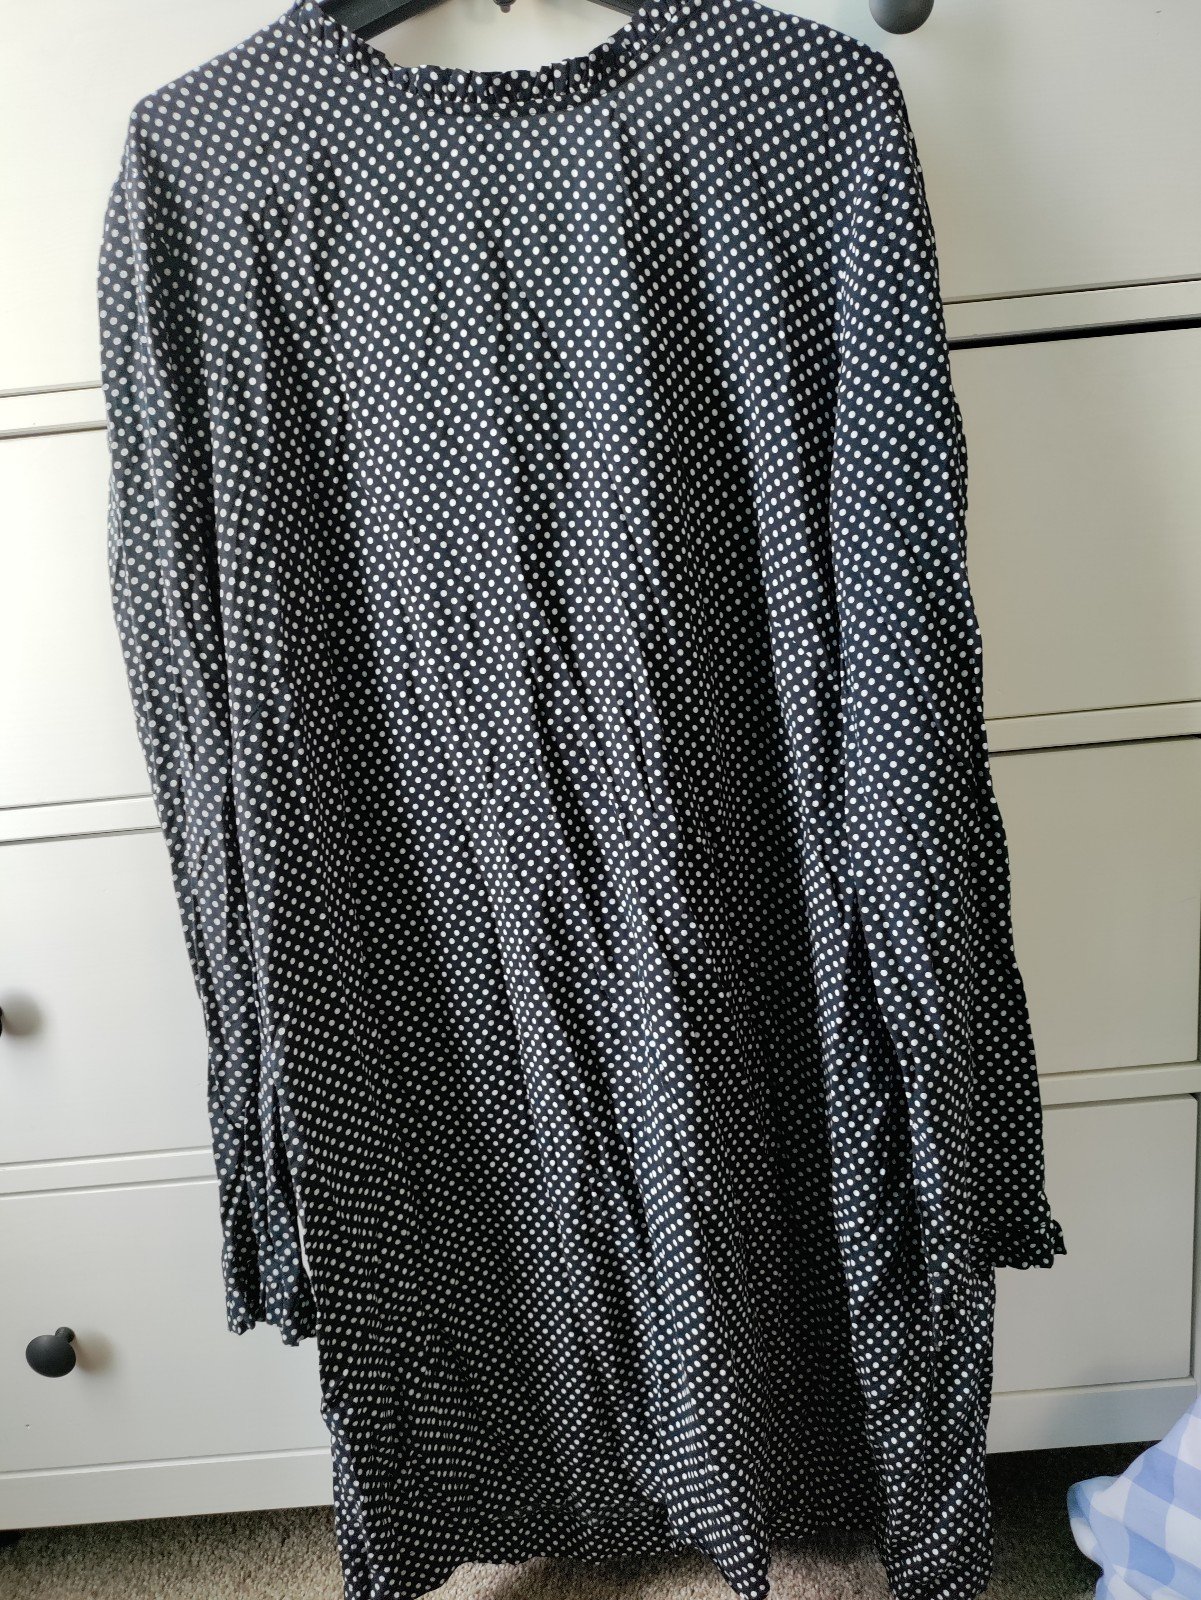 H&M Polka Dot Dress Size 14 ruTXajq1g